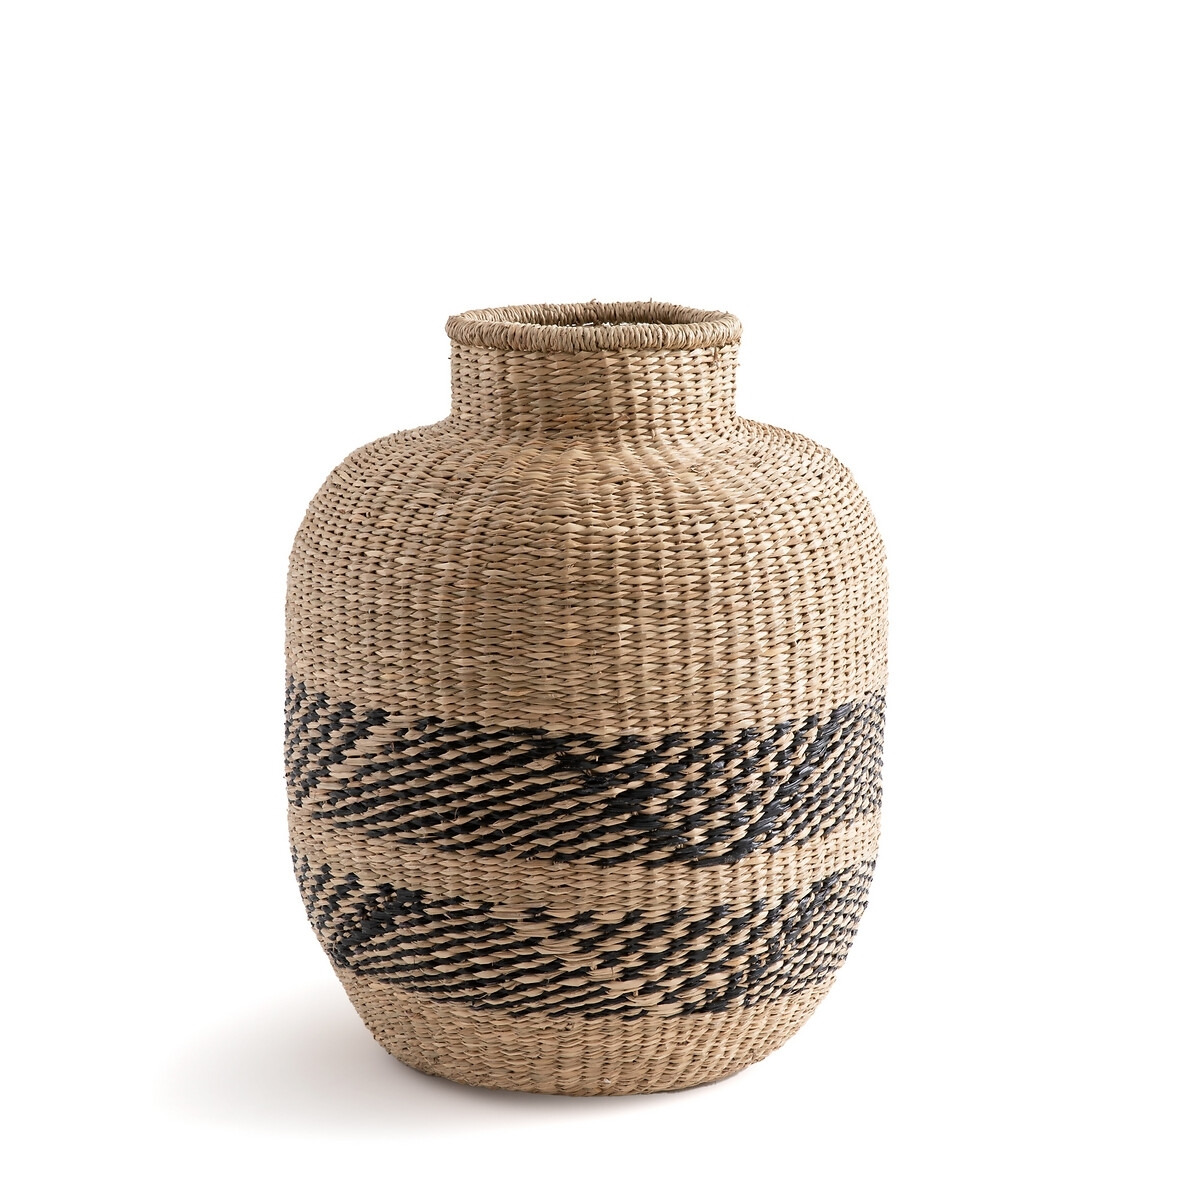 Maylon 50cm High Wicker Decorative Vase - image 1